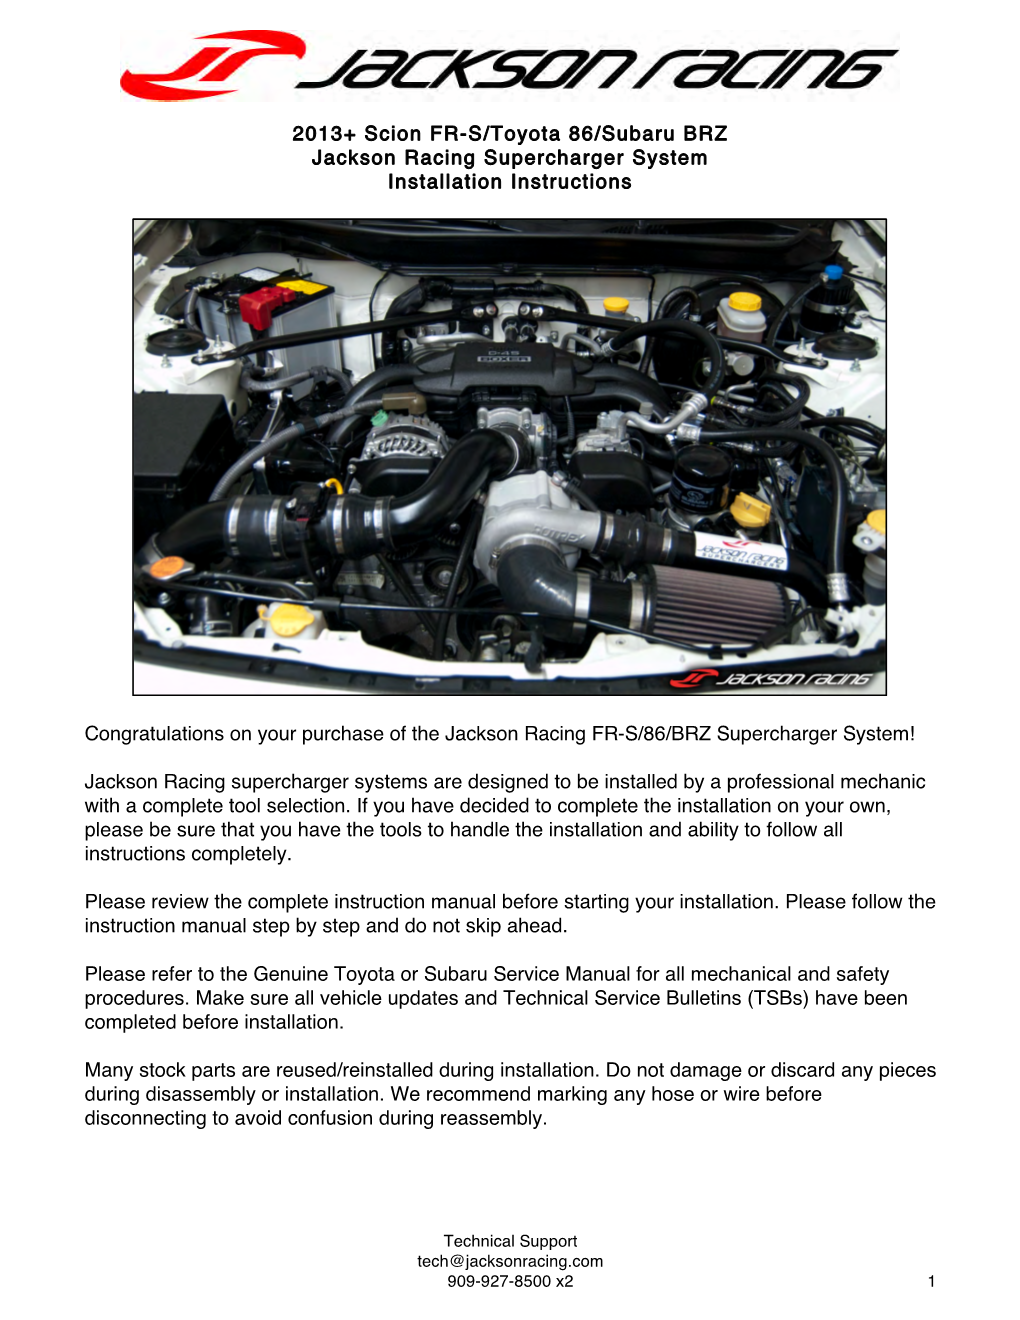 Scion Fr S Toyota Subaru Brz Jackson Racing Supercharger System Installation